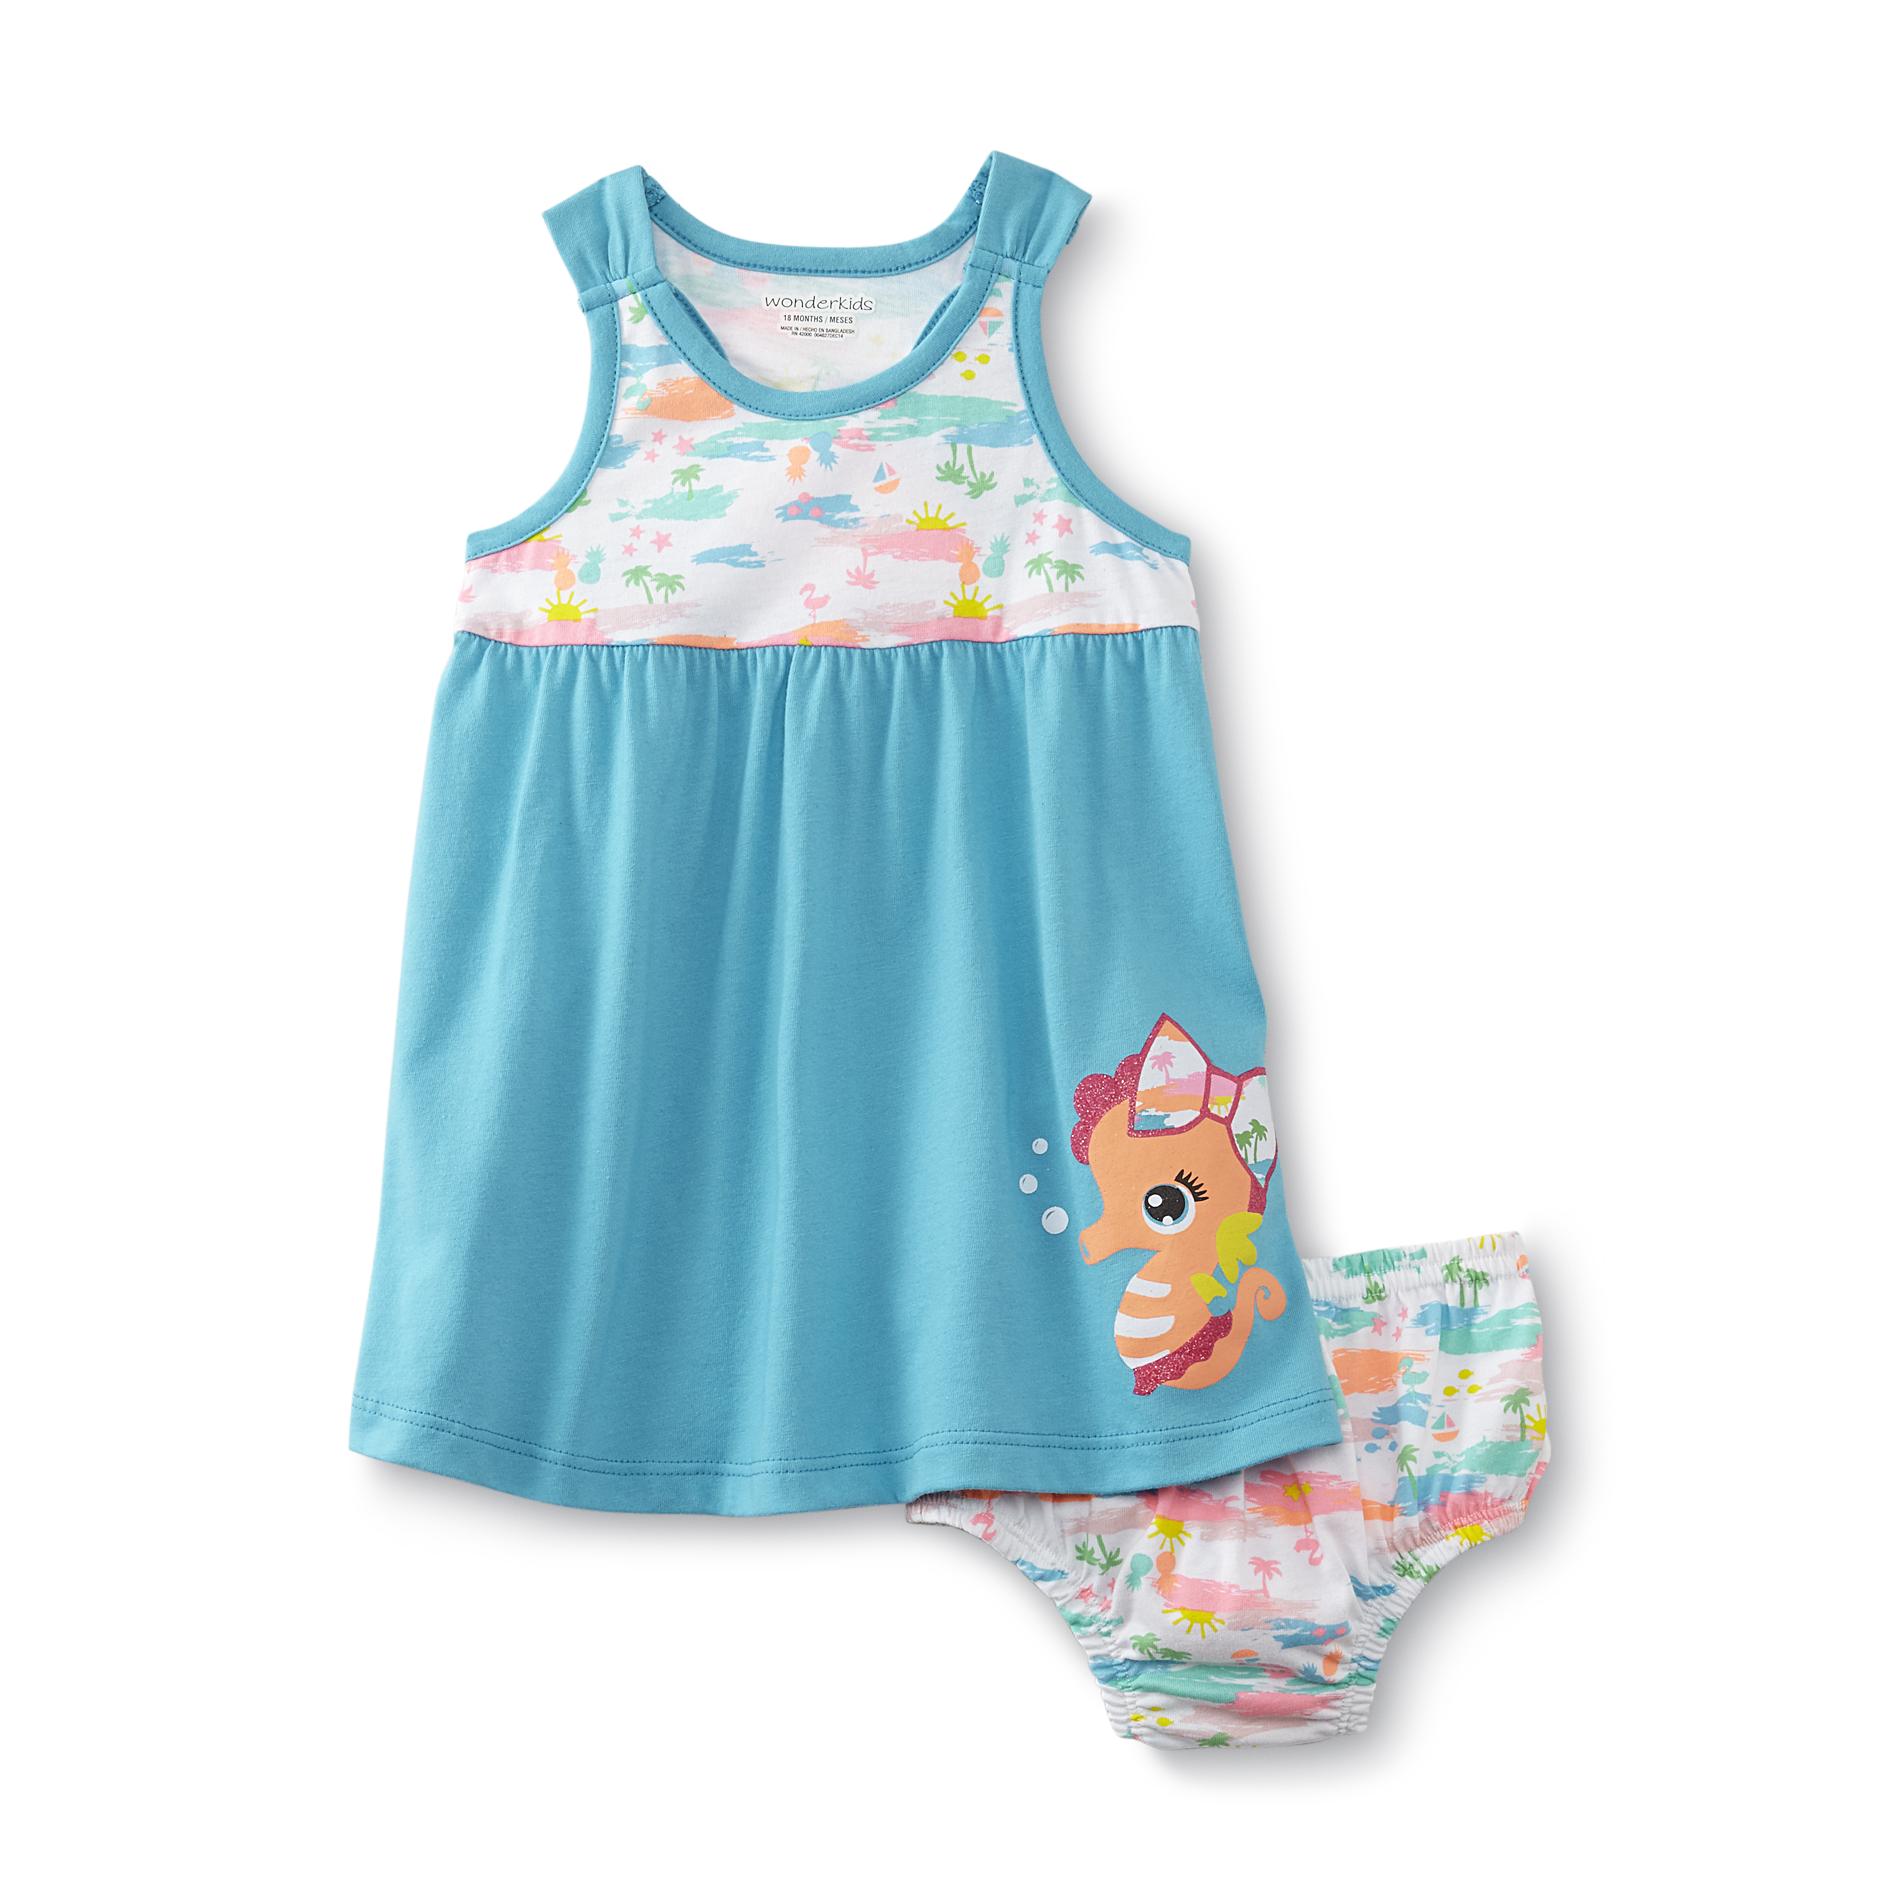 WonderKids Infant & Toddler Girl's Knit Dress - Sea Horse